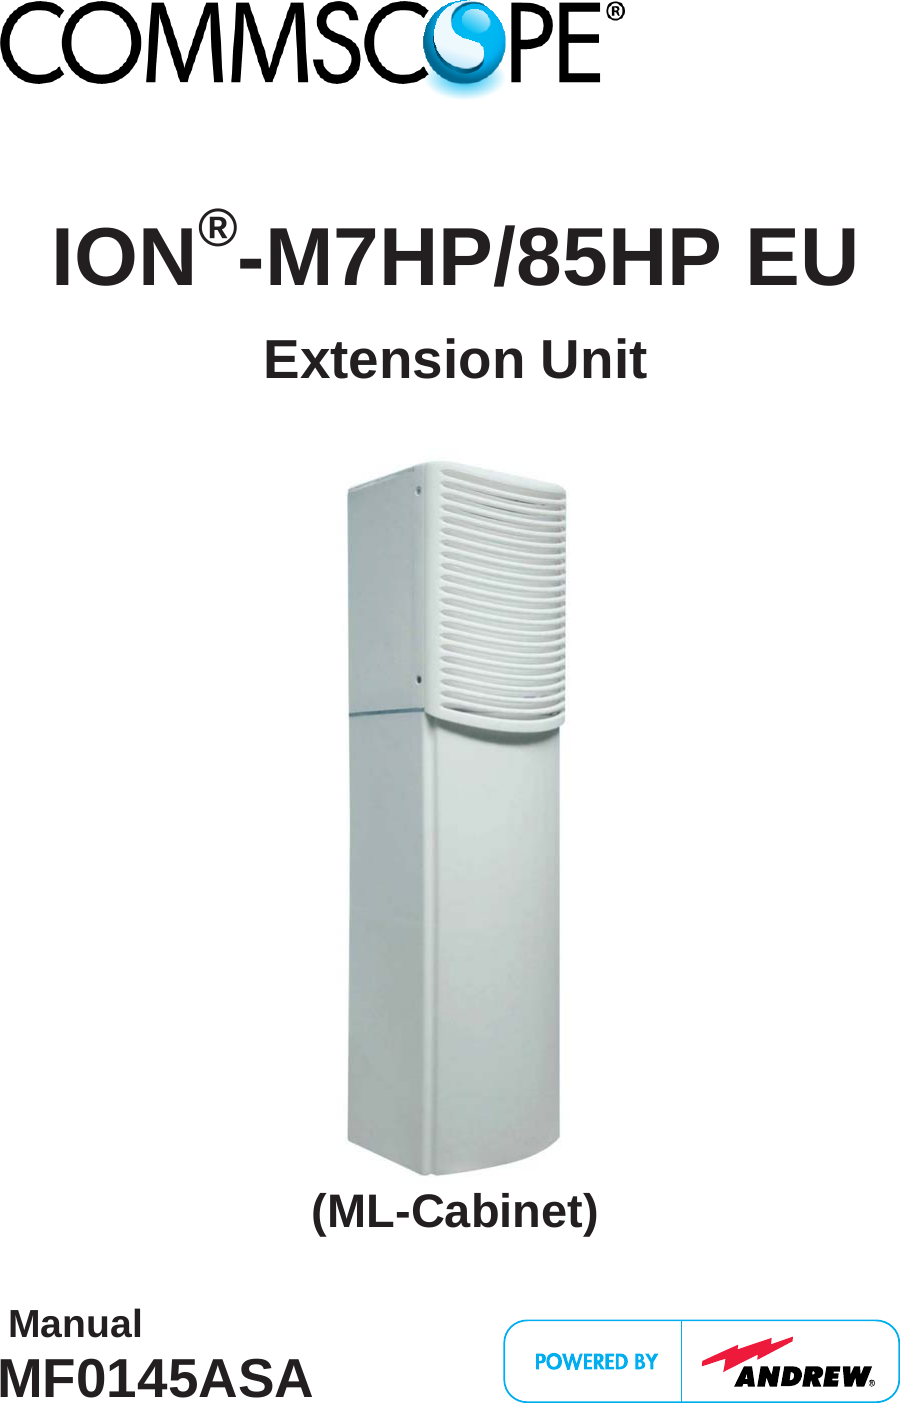    ION®-M7HP/85HP EU Extension Unit   (ML-Cabinet)    Manual MF0145ASA  